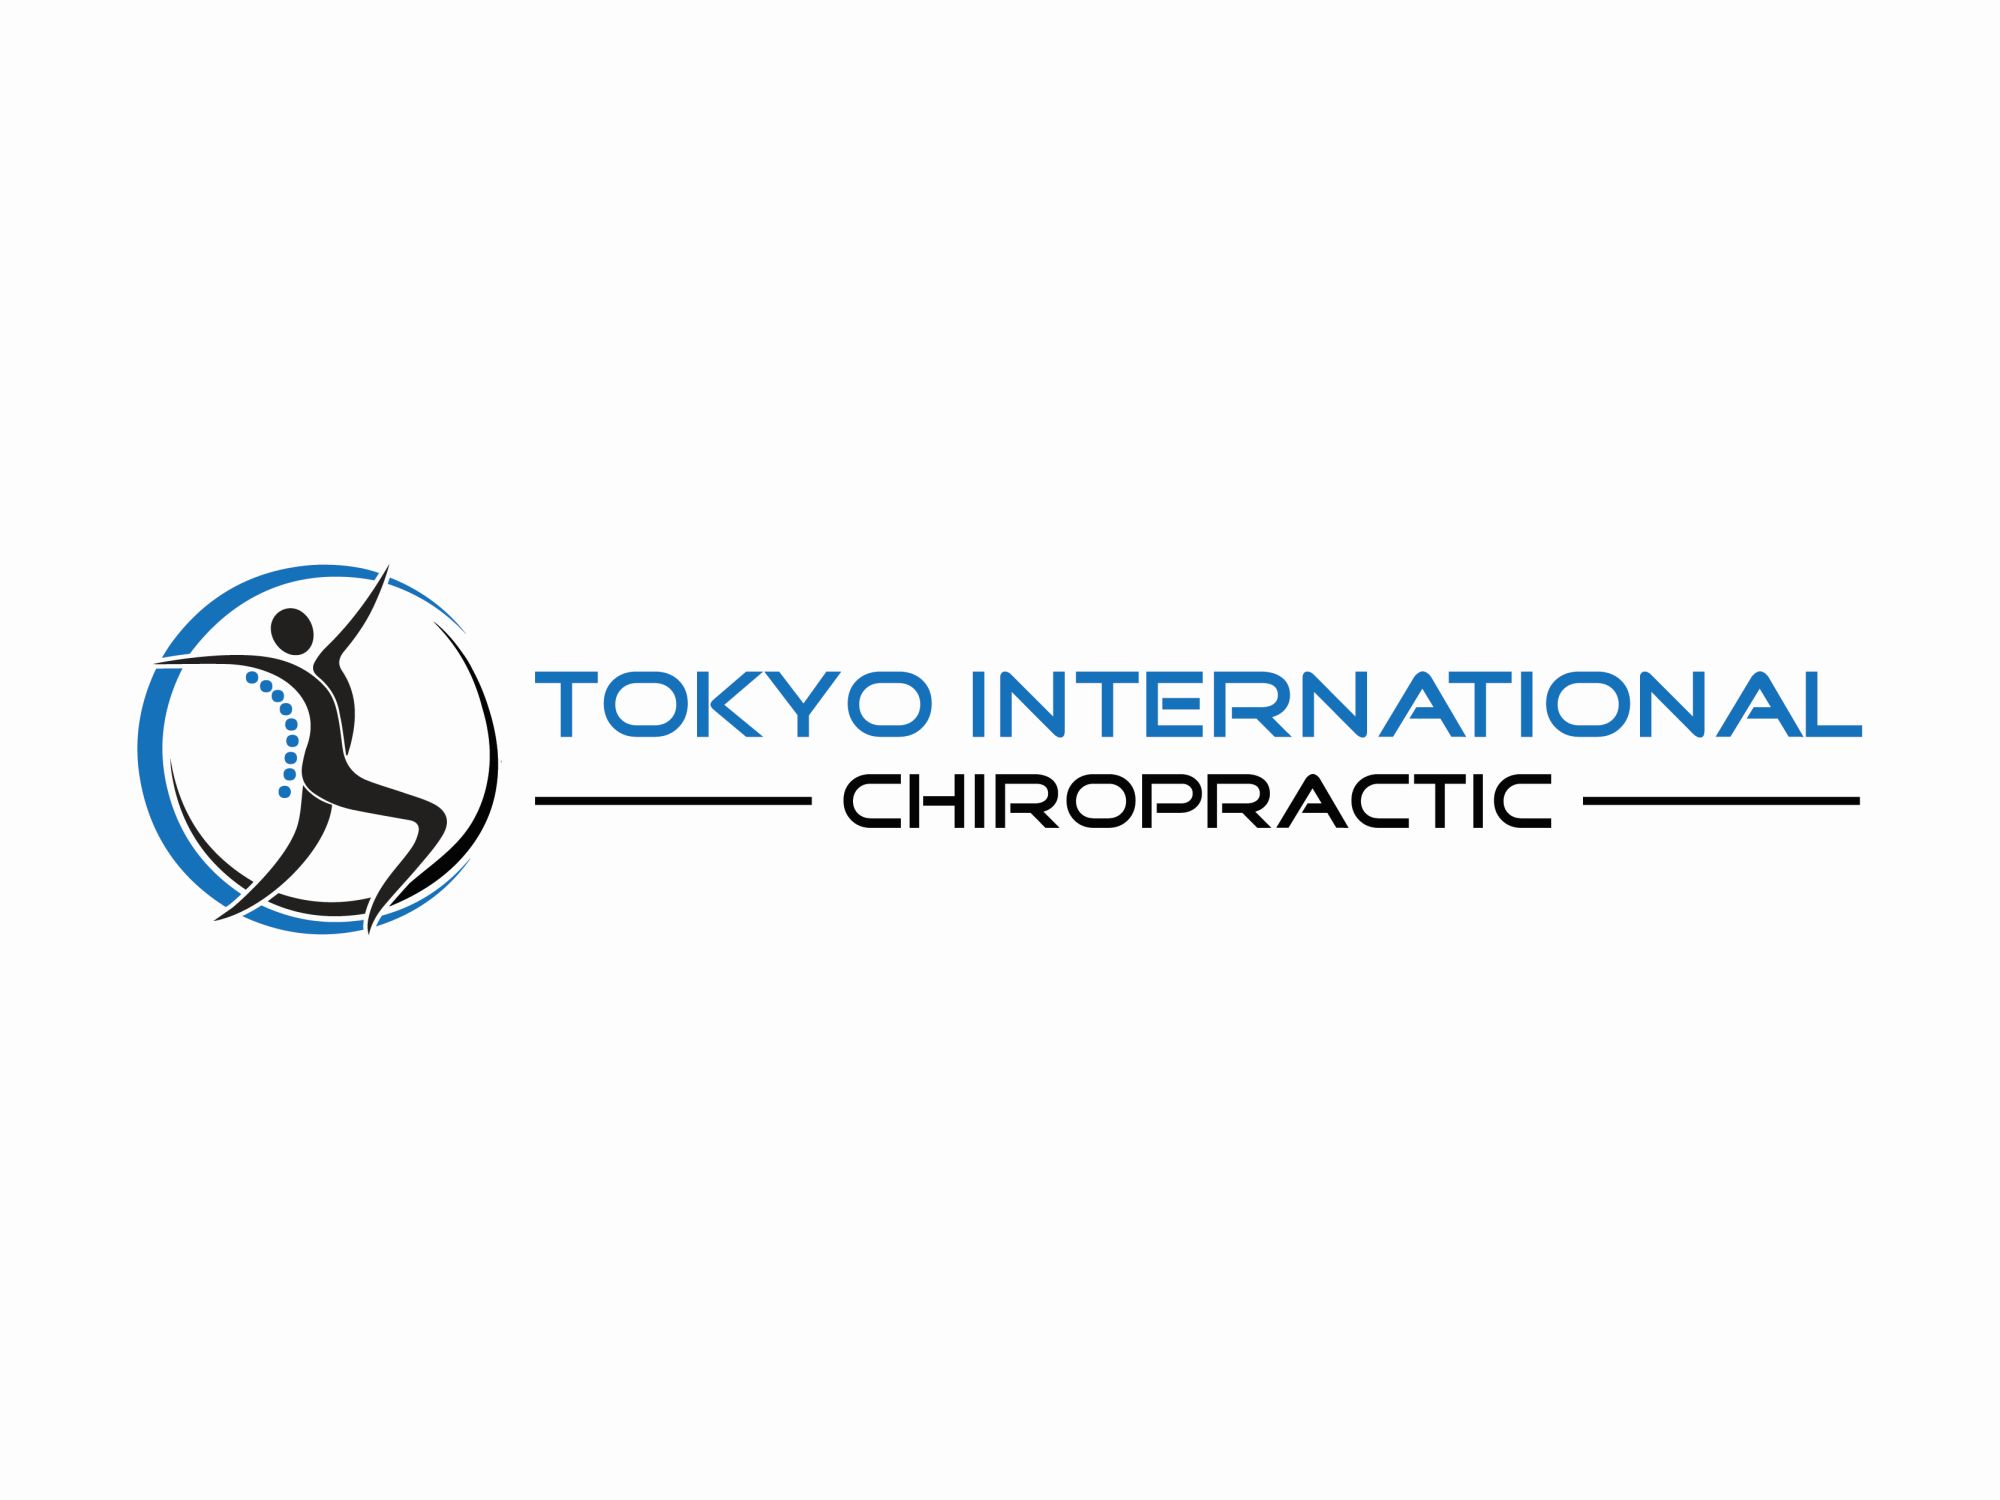 Tokyo International Chiropractic